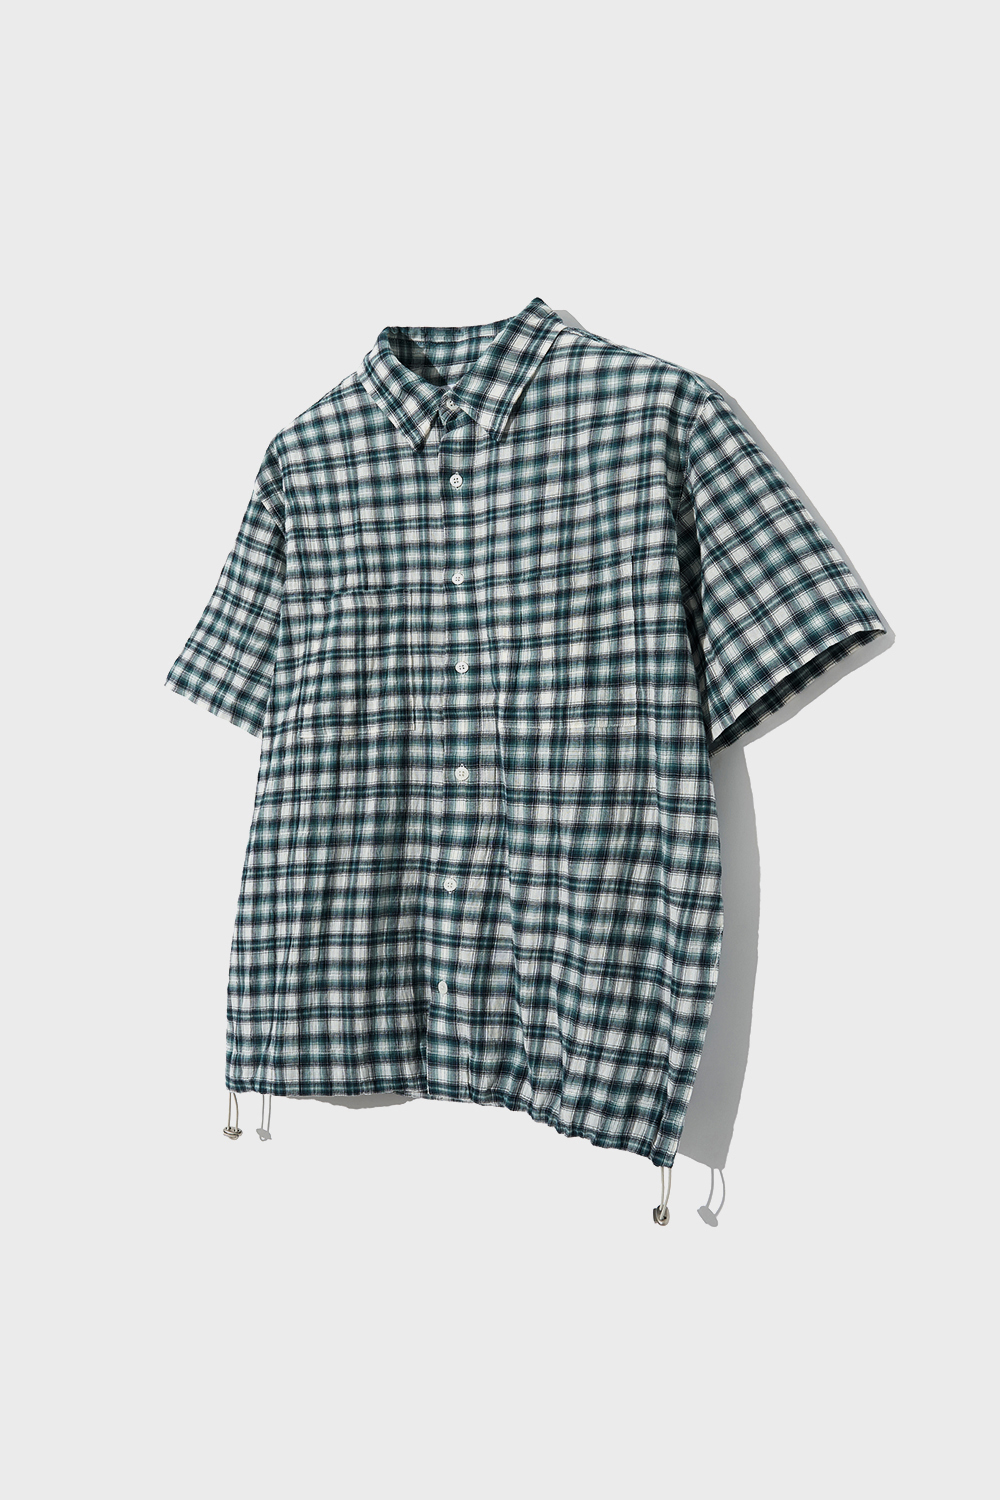 Aiden String Half Shirts (Green Check)